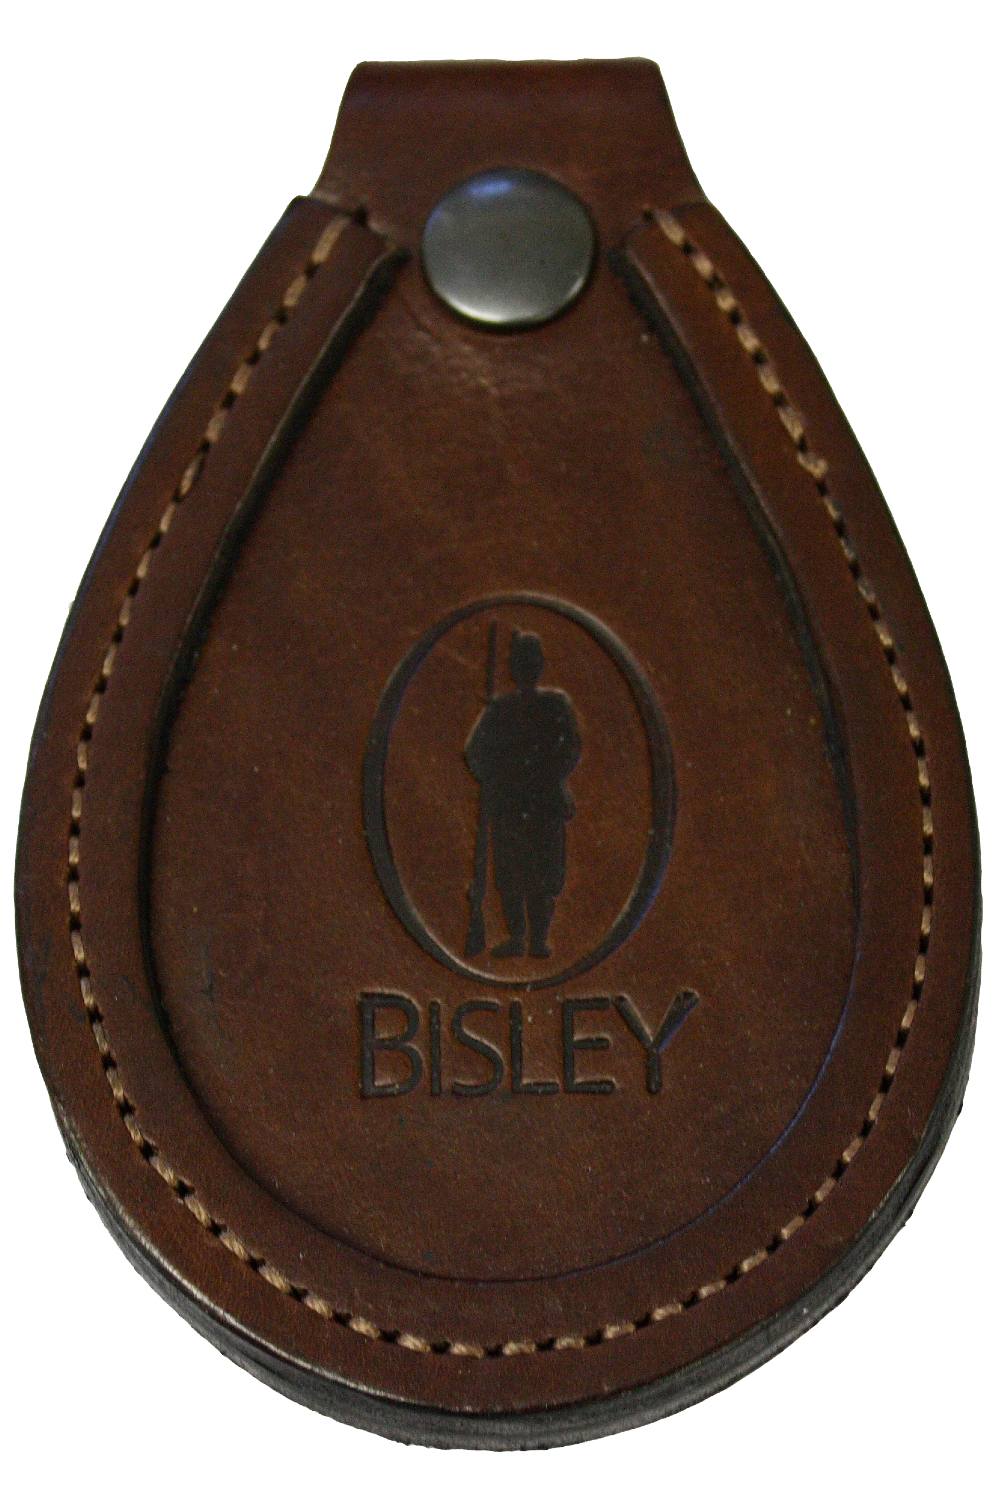 Bisley Leather Toe Protector